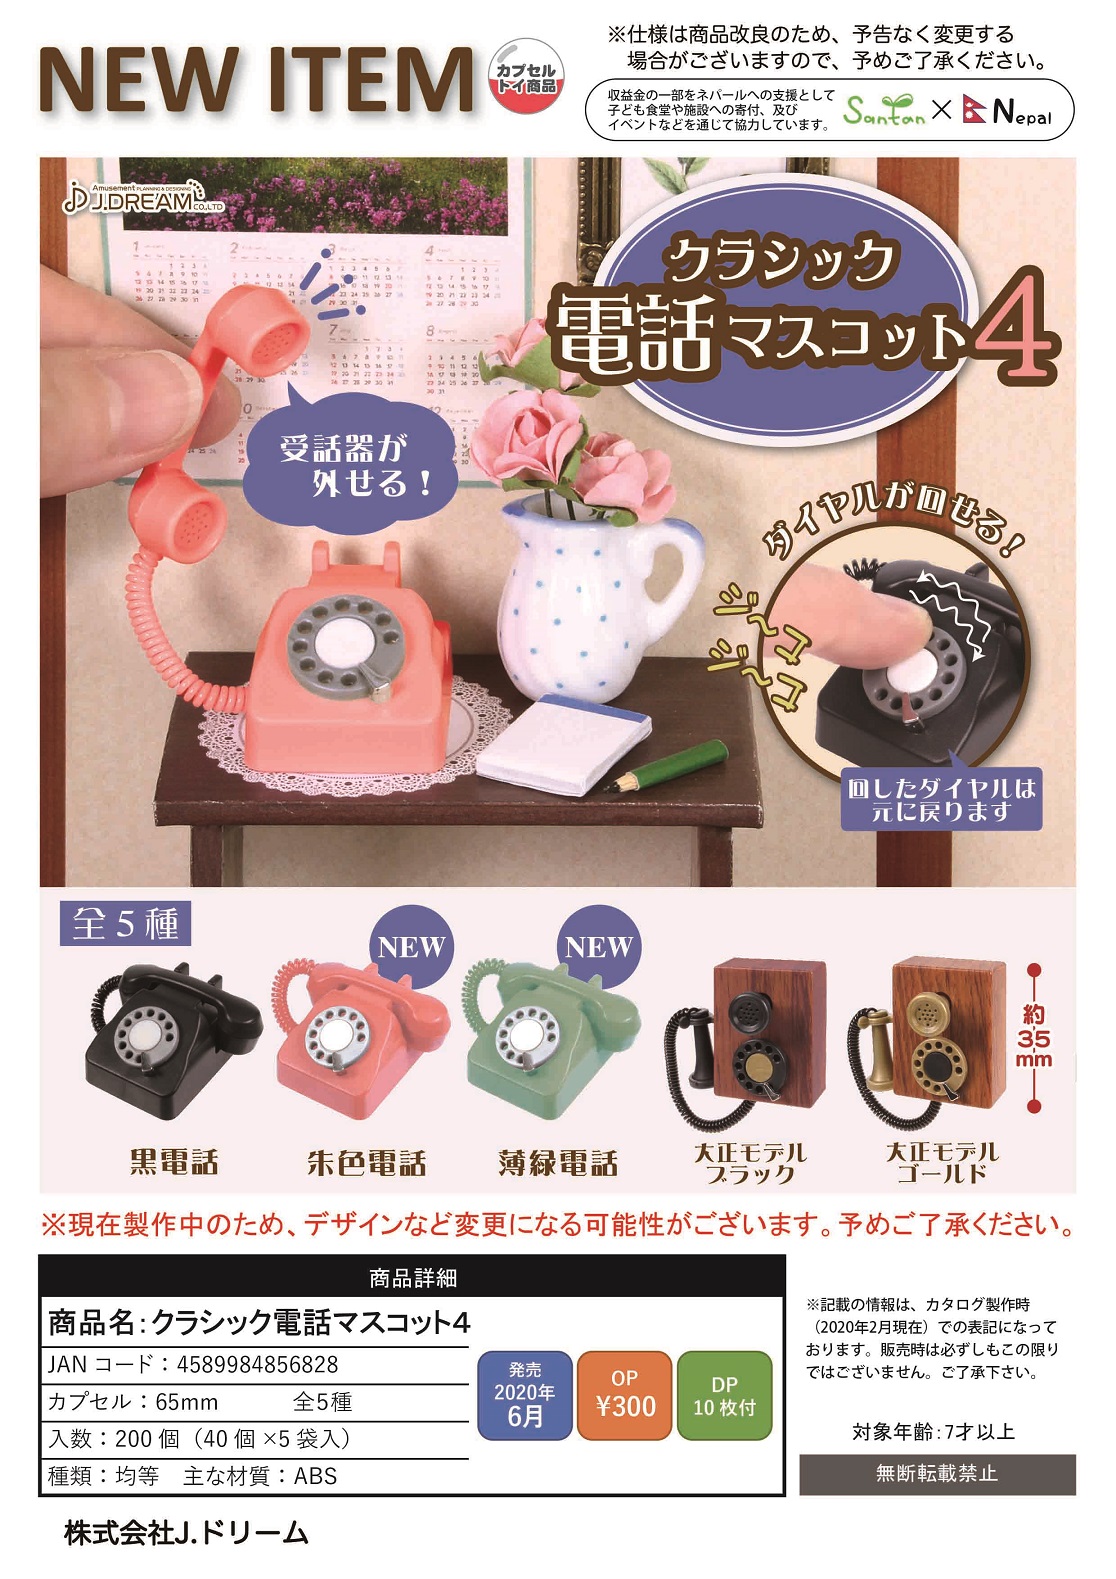 【B】300日元扭蛋 小手办 复古电话 第4弹 全5种 (1袋40个)  856828